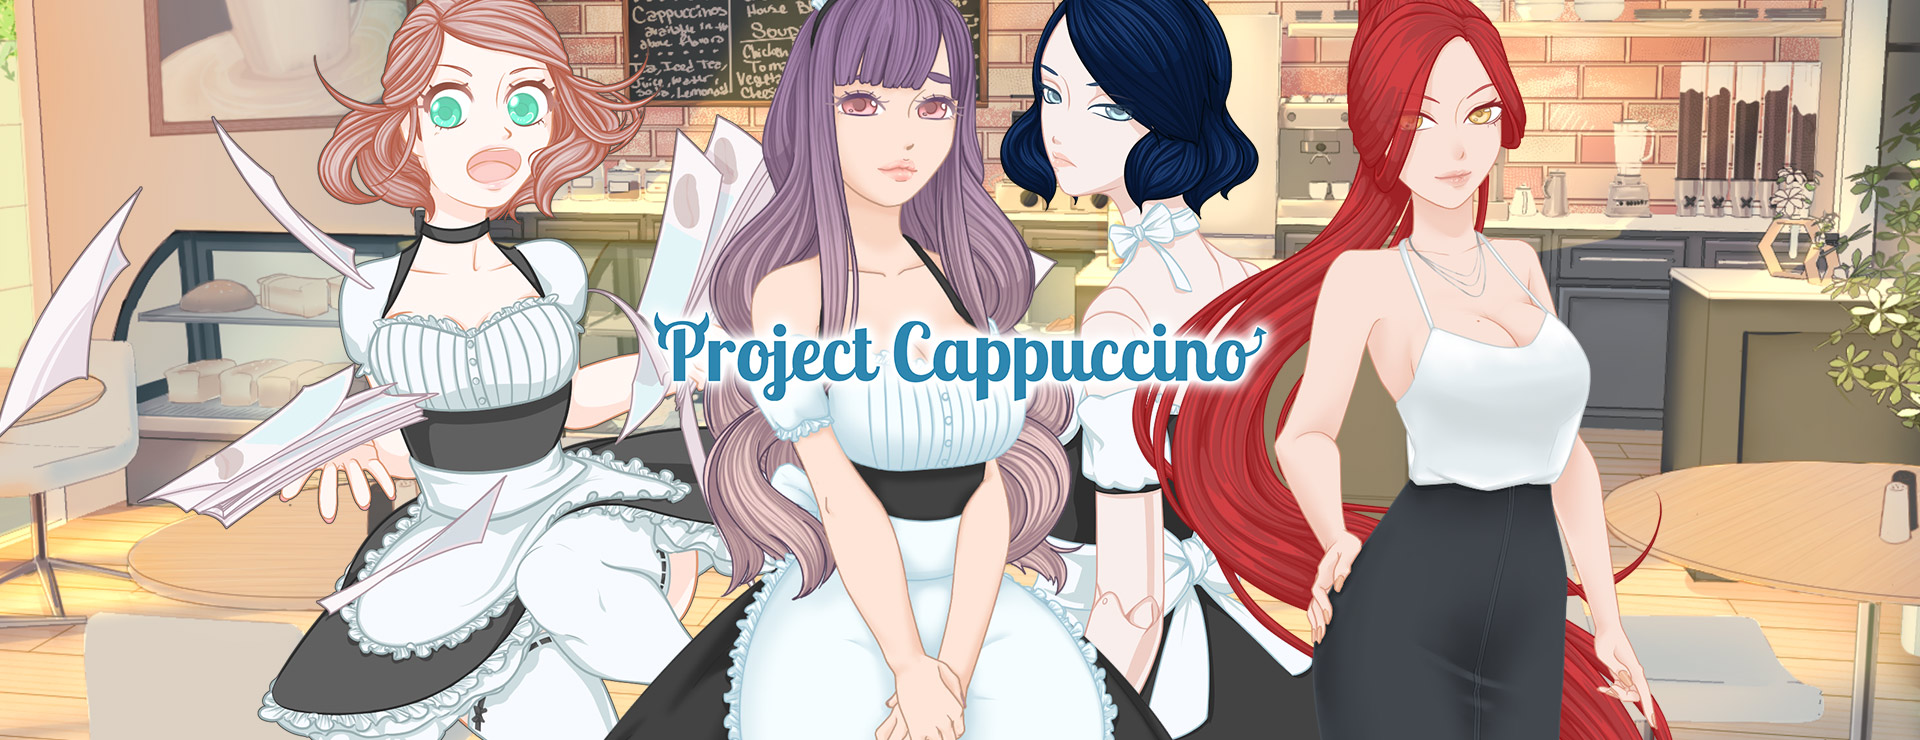 Project Cappuccino - Novela Visual Juego